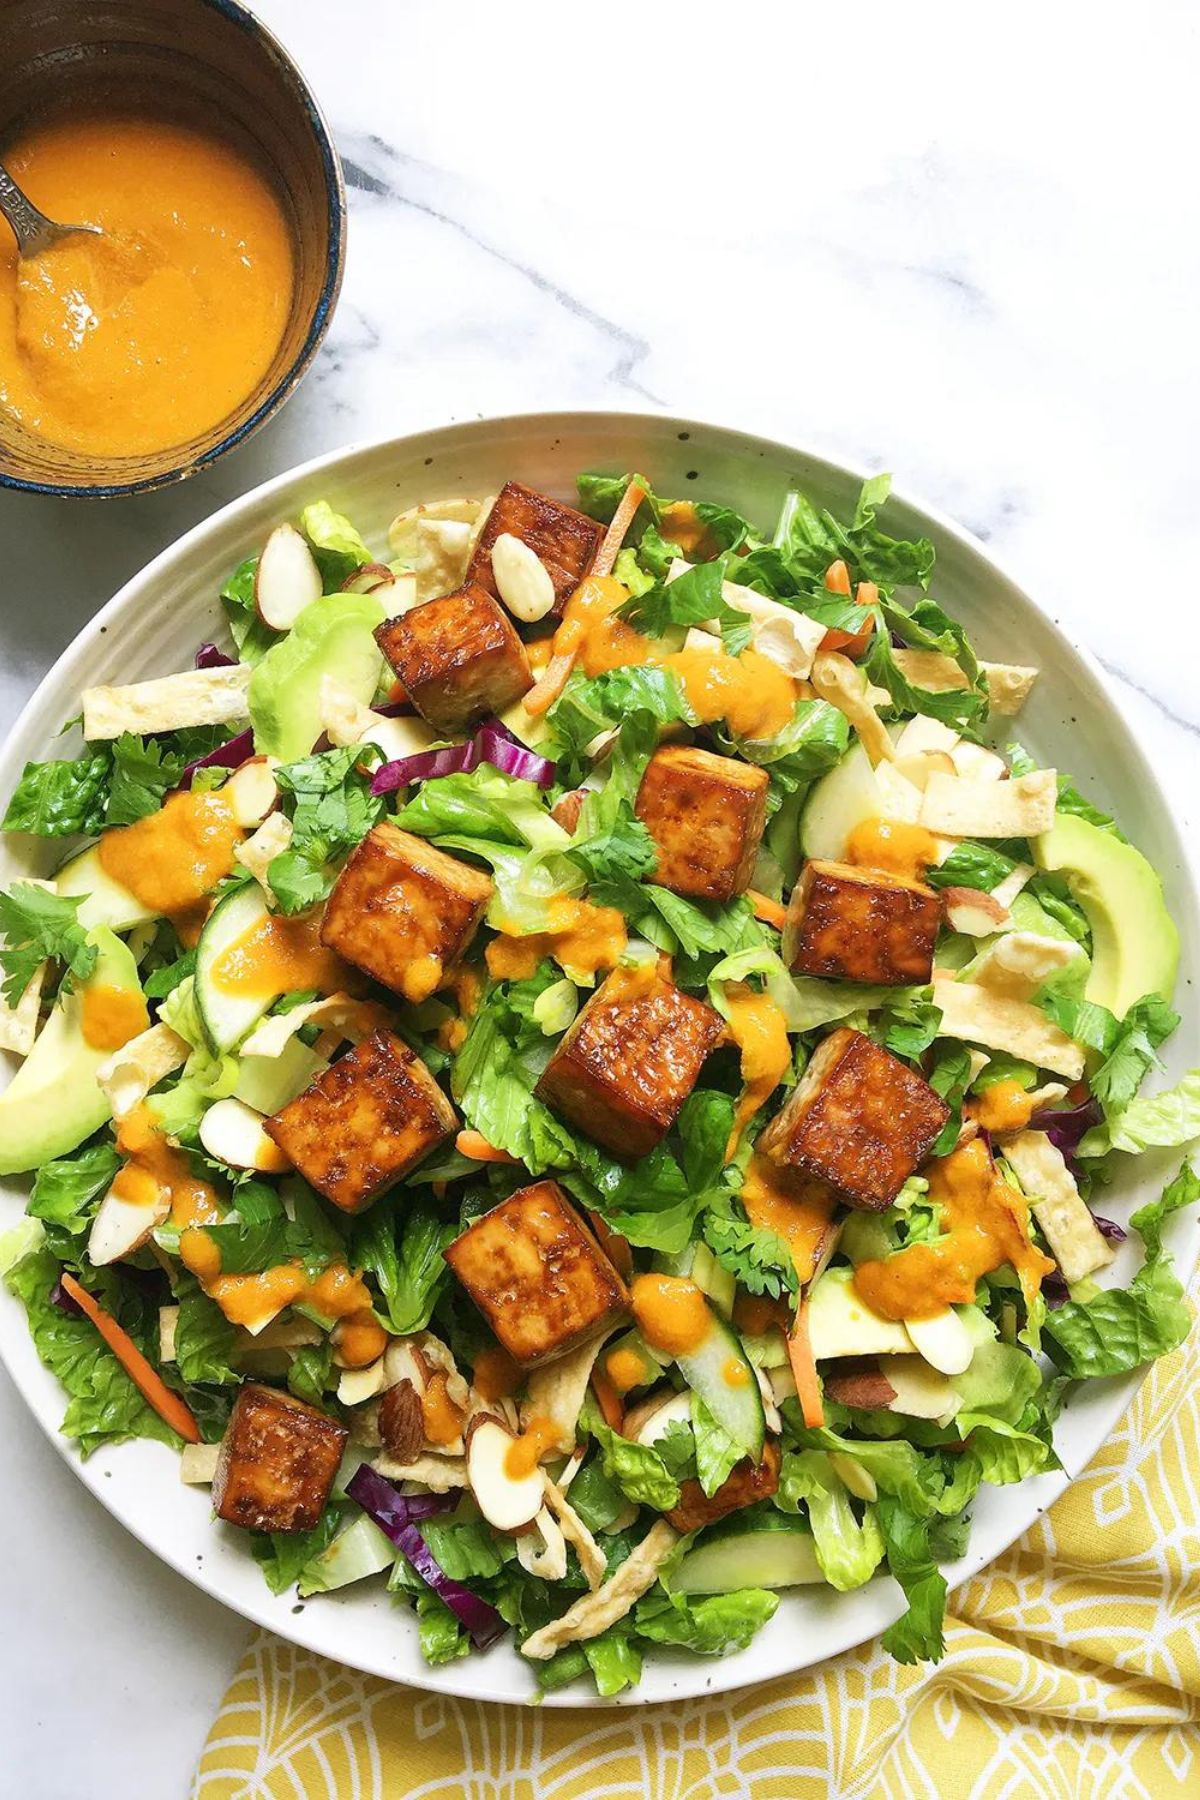 A vegan salad with tofu and avocado on a plate.